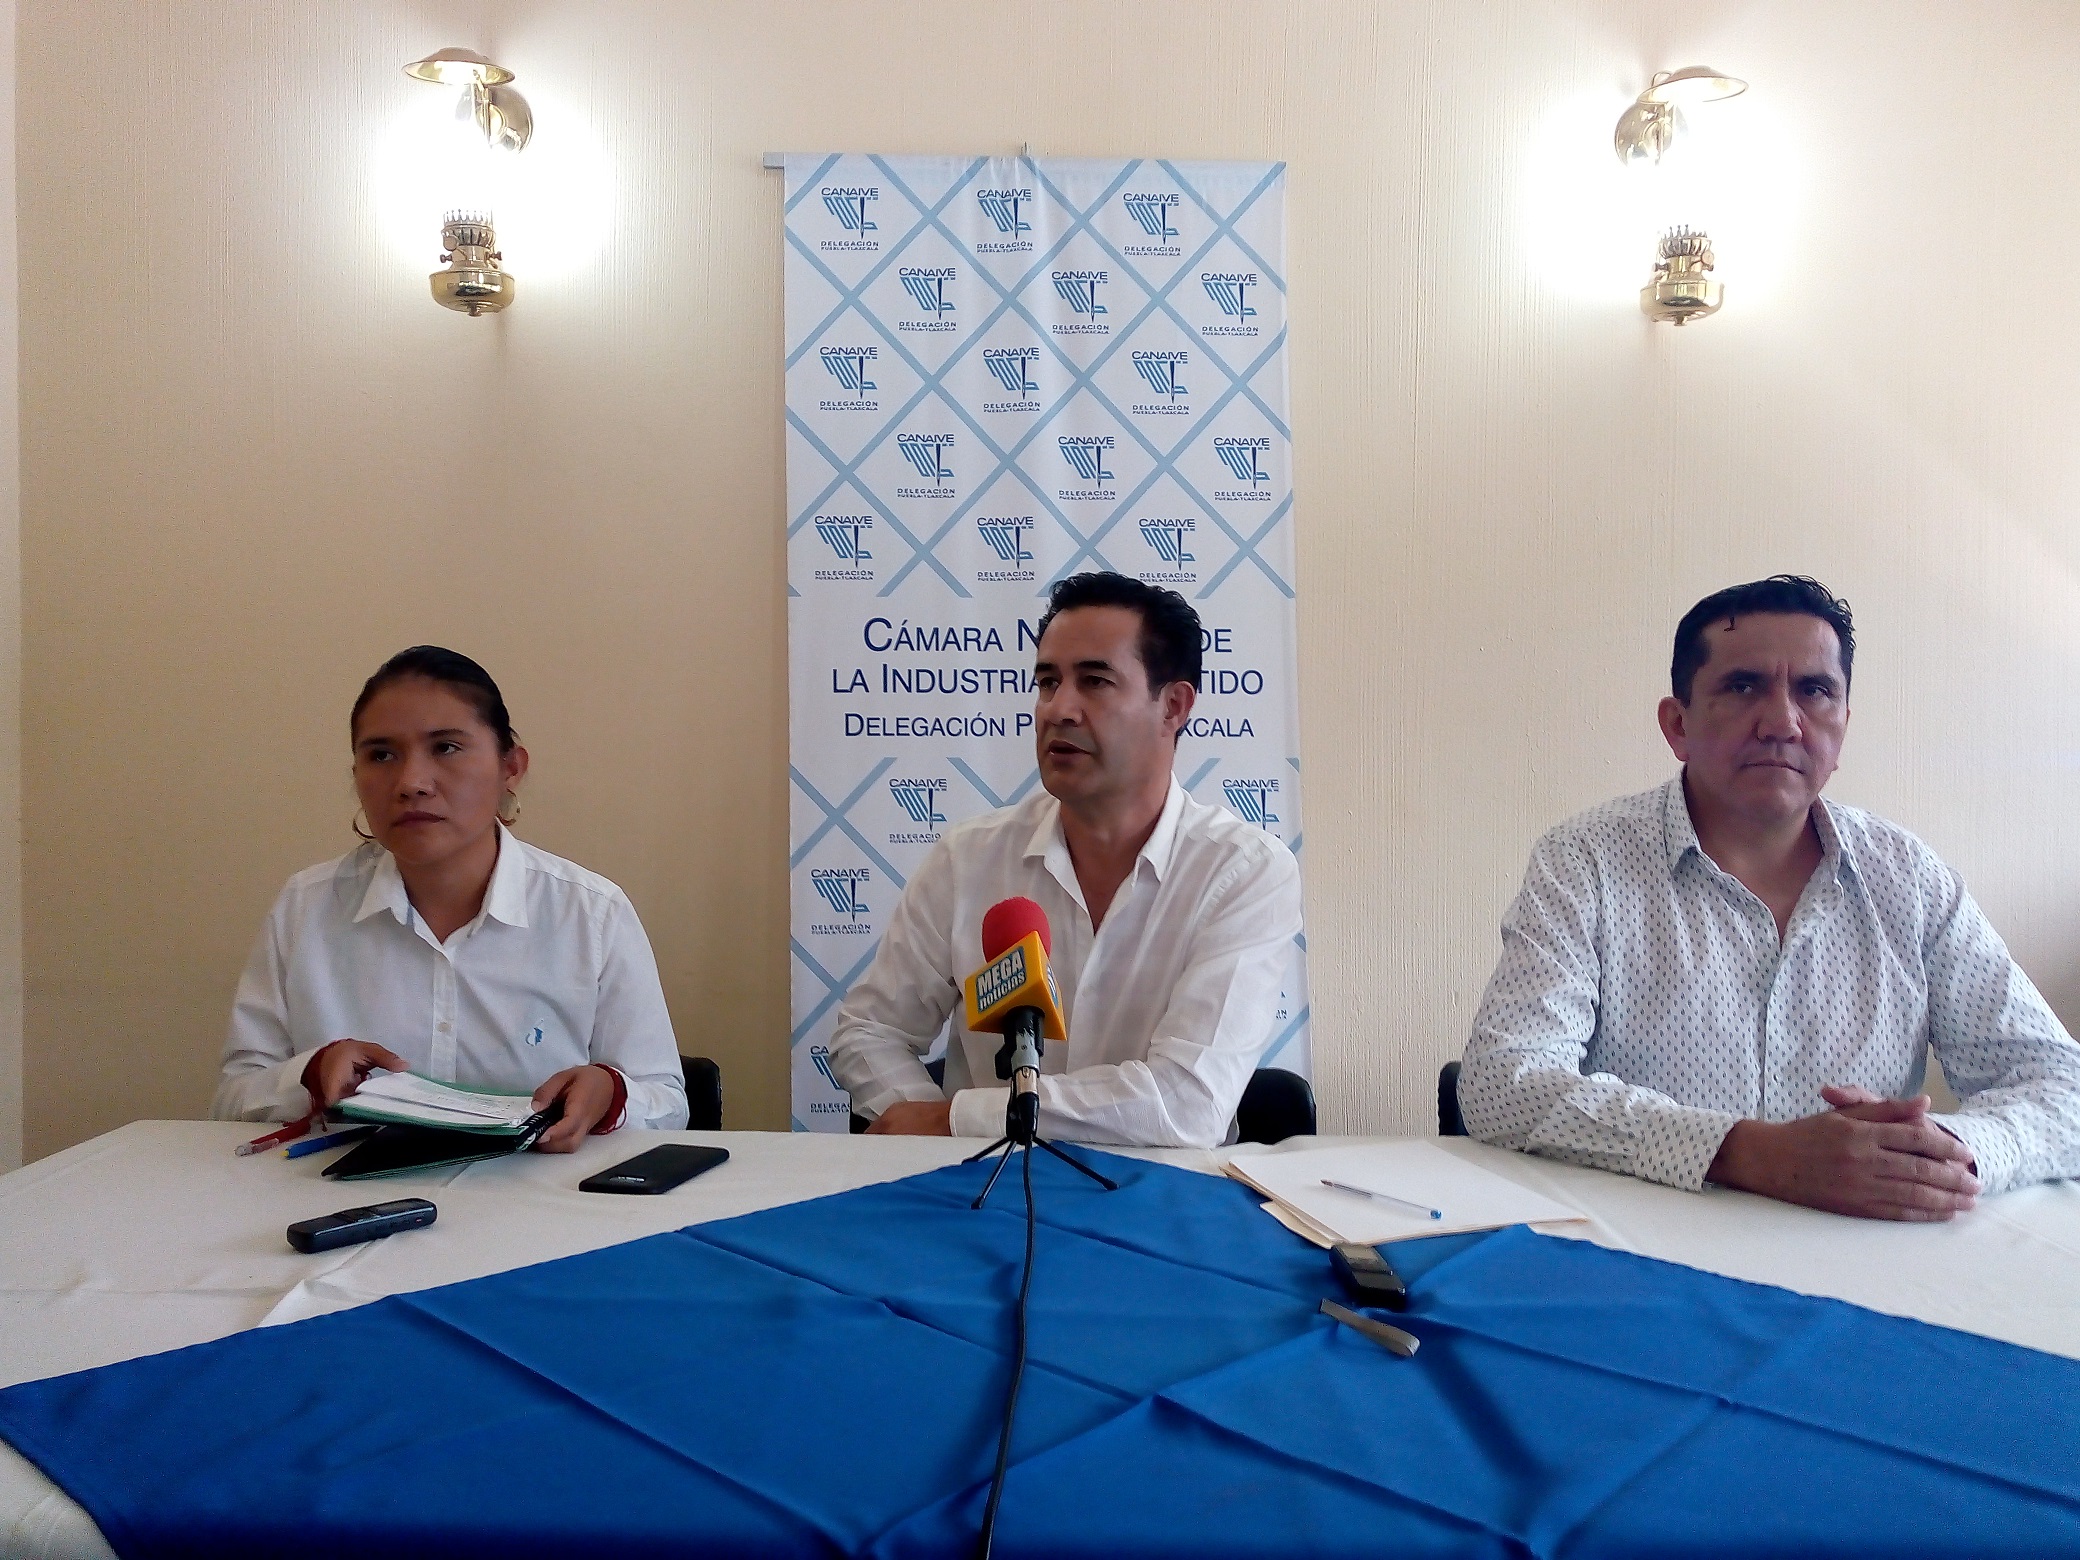 Golpea inseguridad a empresas textiles: Canaive Puebla-Tlaxcala